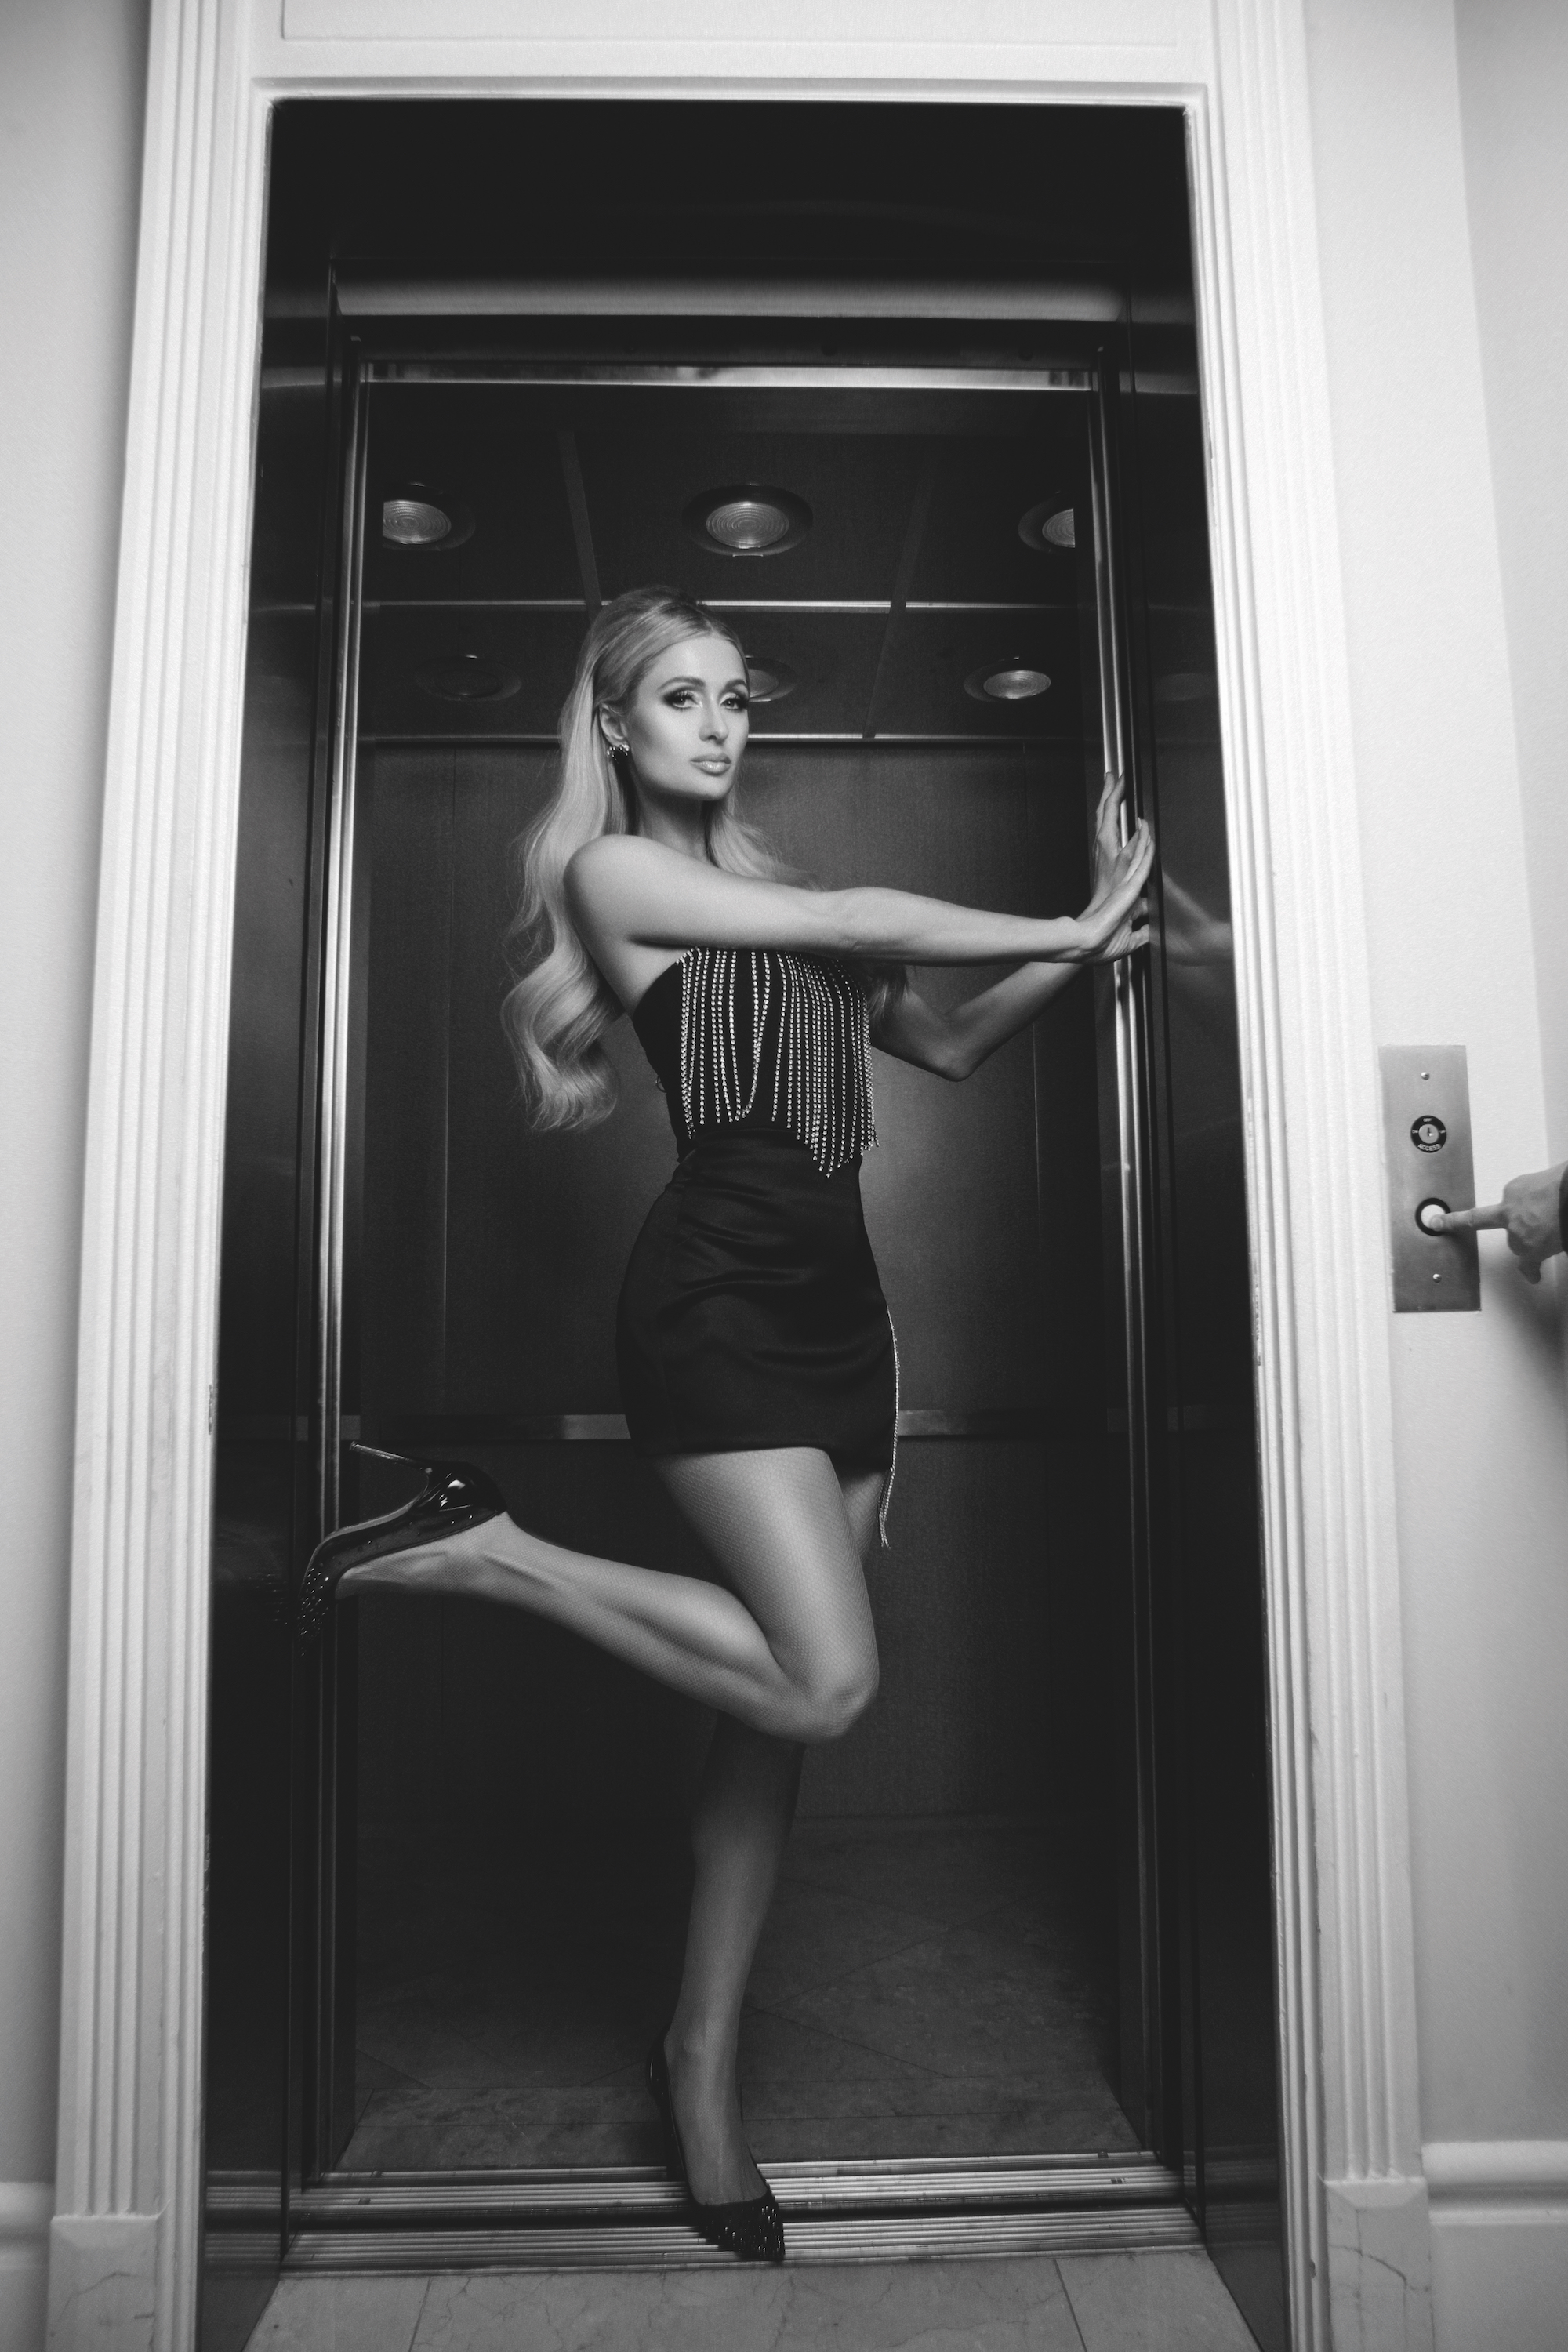 Photos n°7 : Paris Hilton Oozing Sex Appeal in New Shoot!